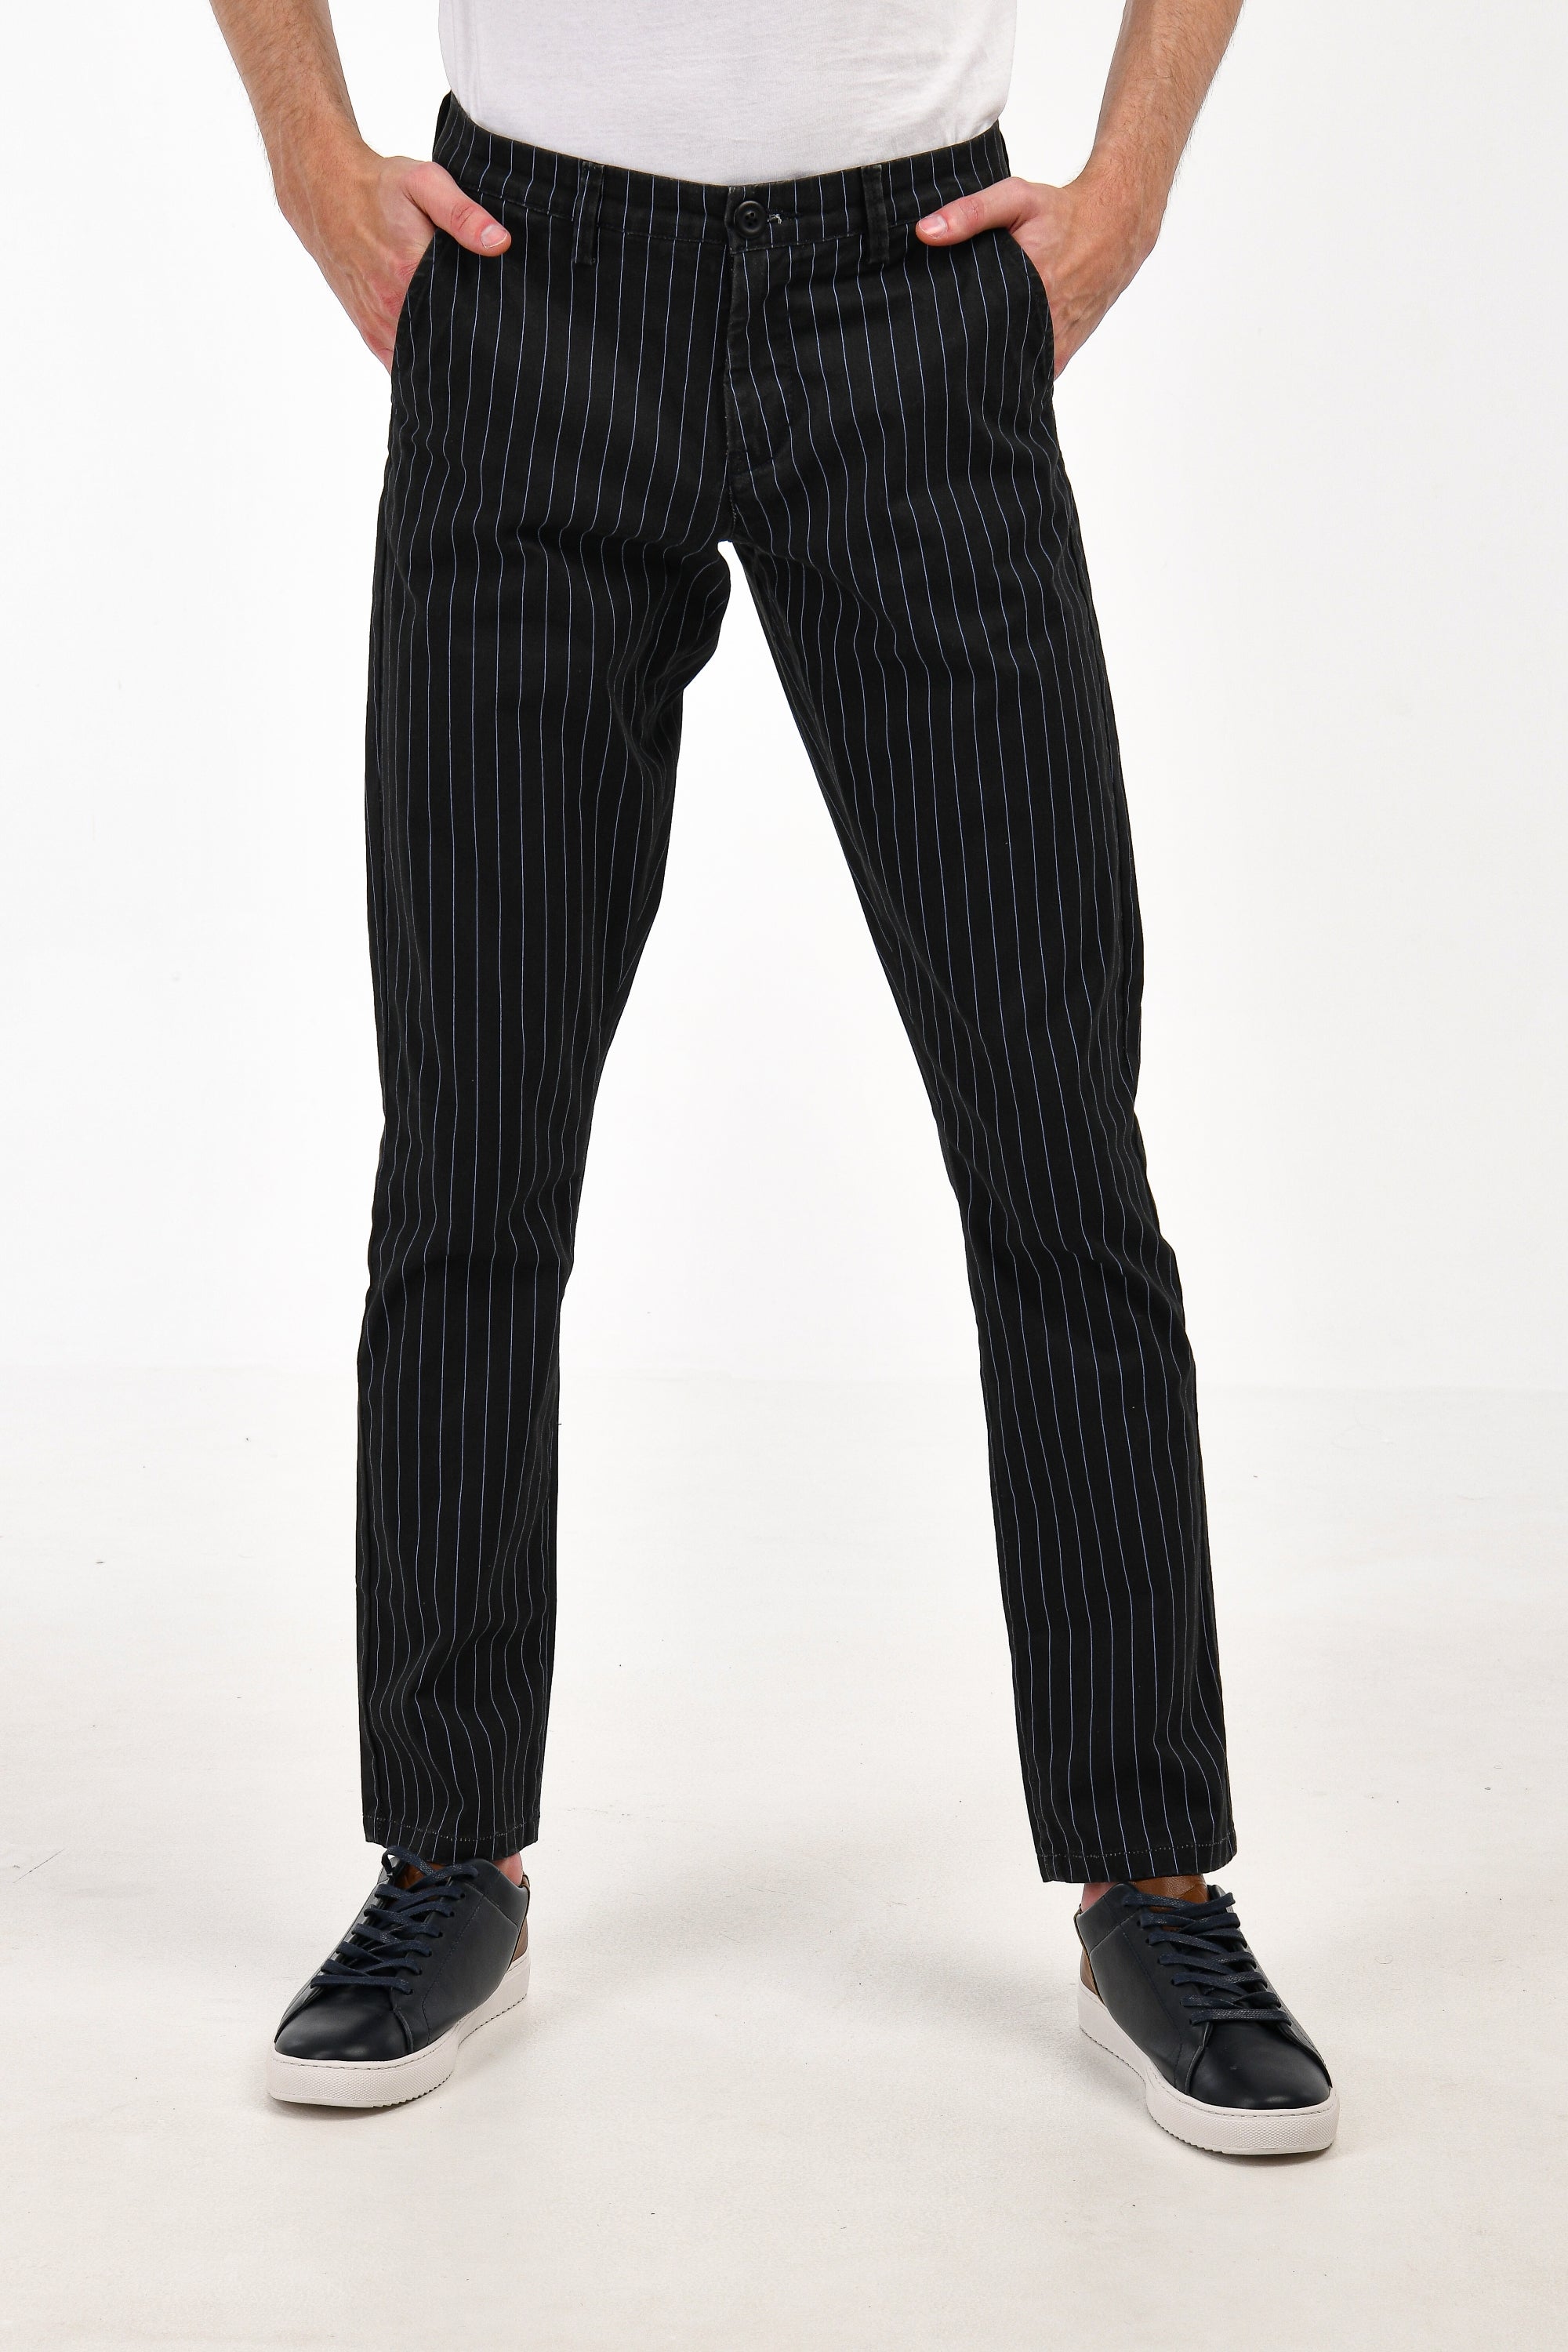 Black Striped Pants Equator